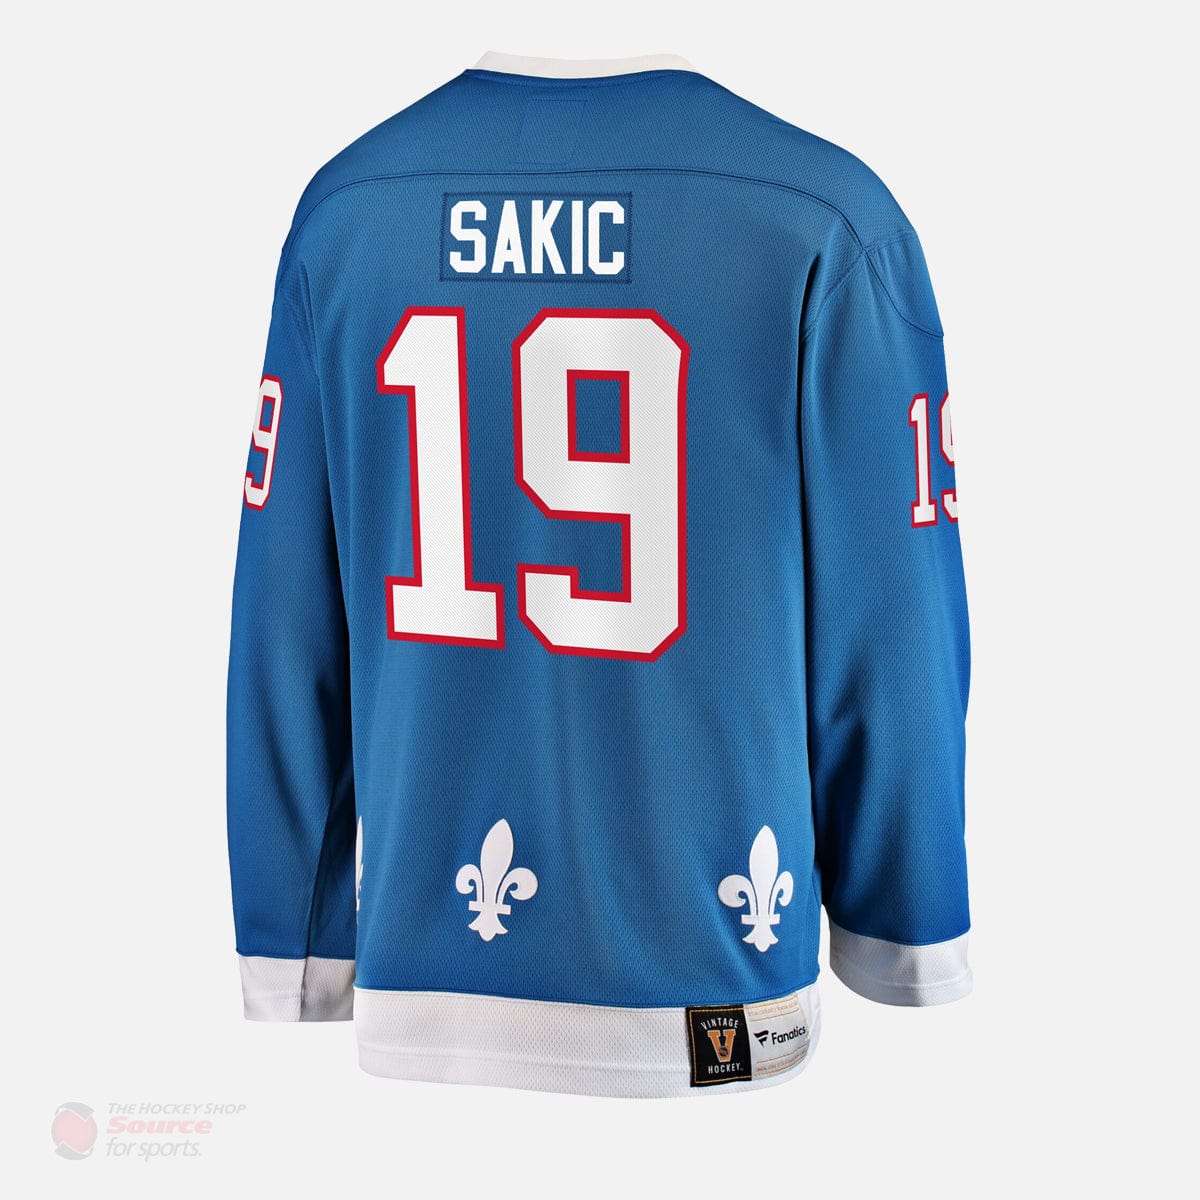 Quebec Nordiques Fanatics Breakaway Retired Senior Jersey - Joe Sakic